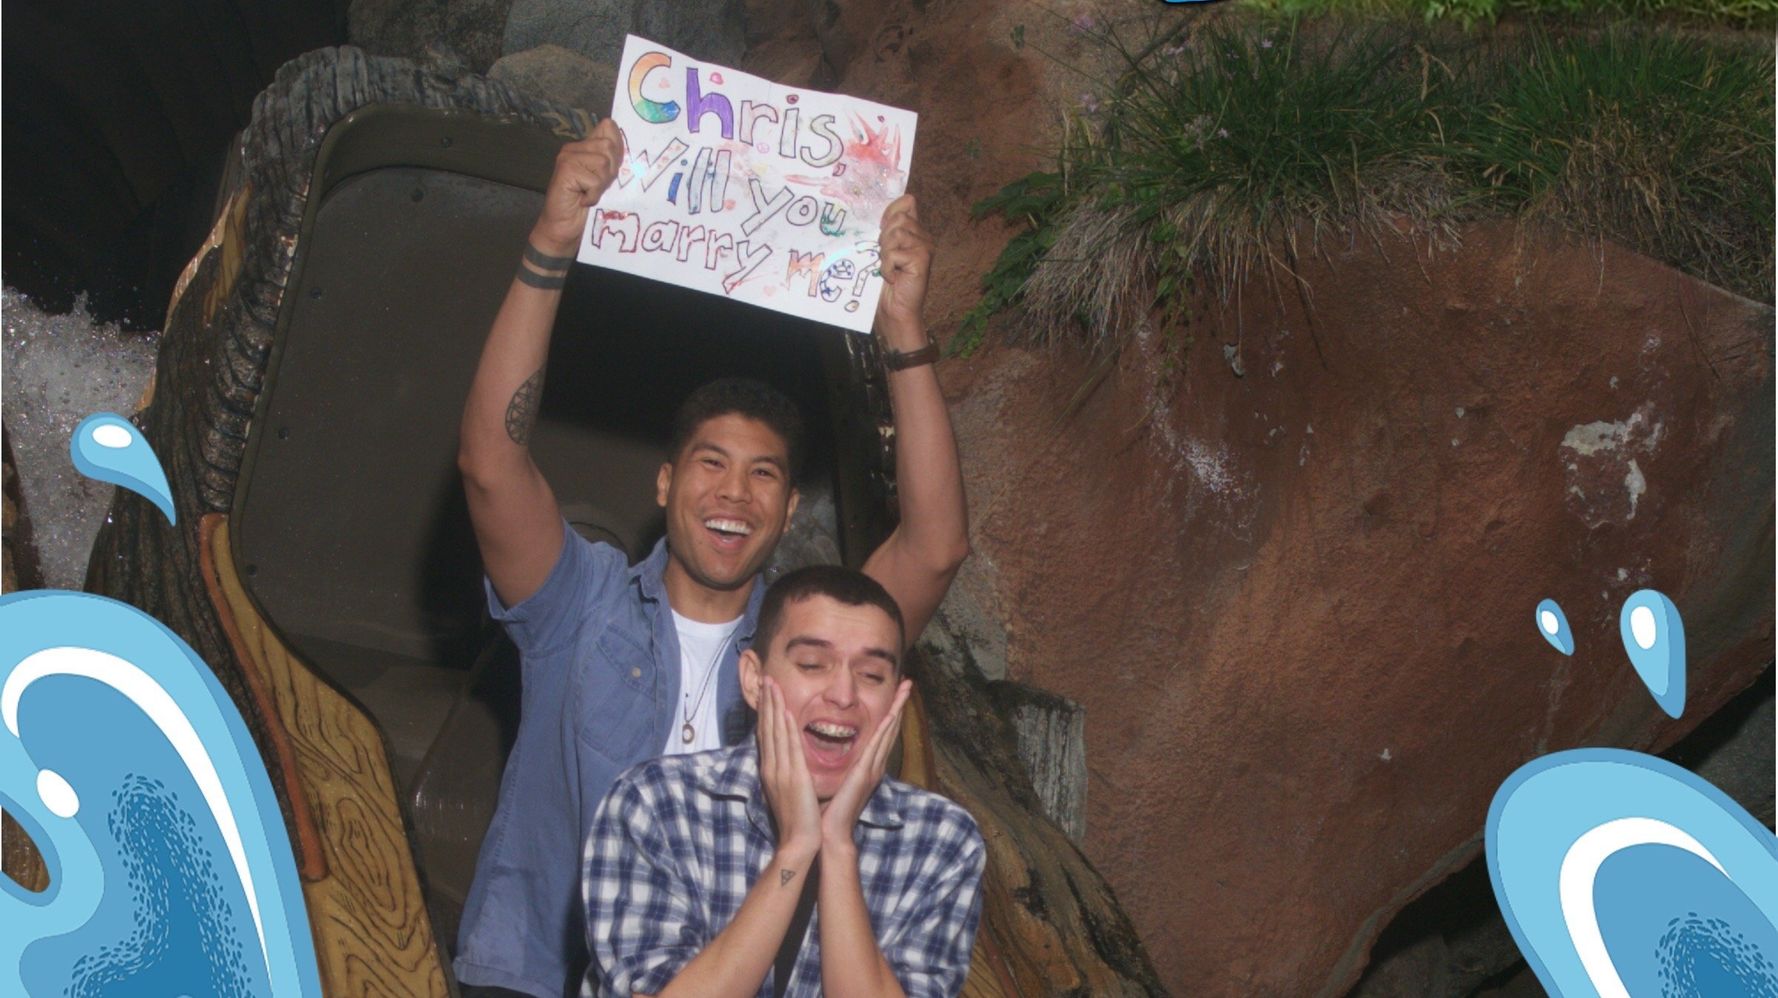 This Couple's Splash Mountain Proposal Is A Disney Fantasy Come True.